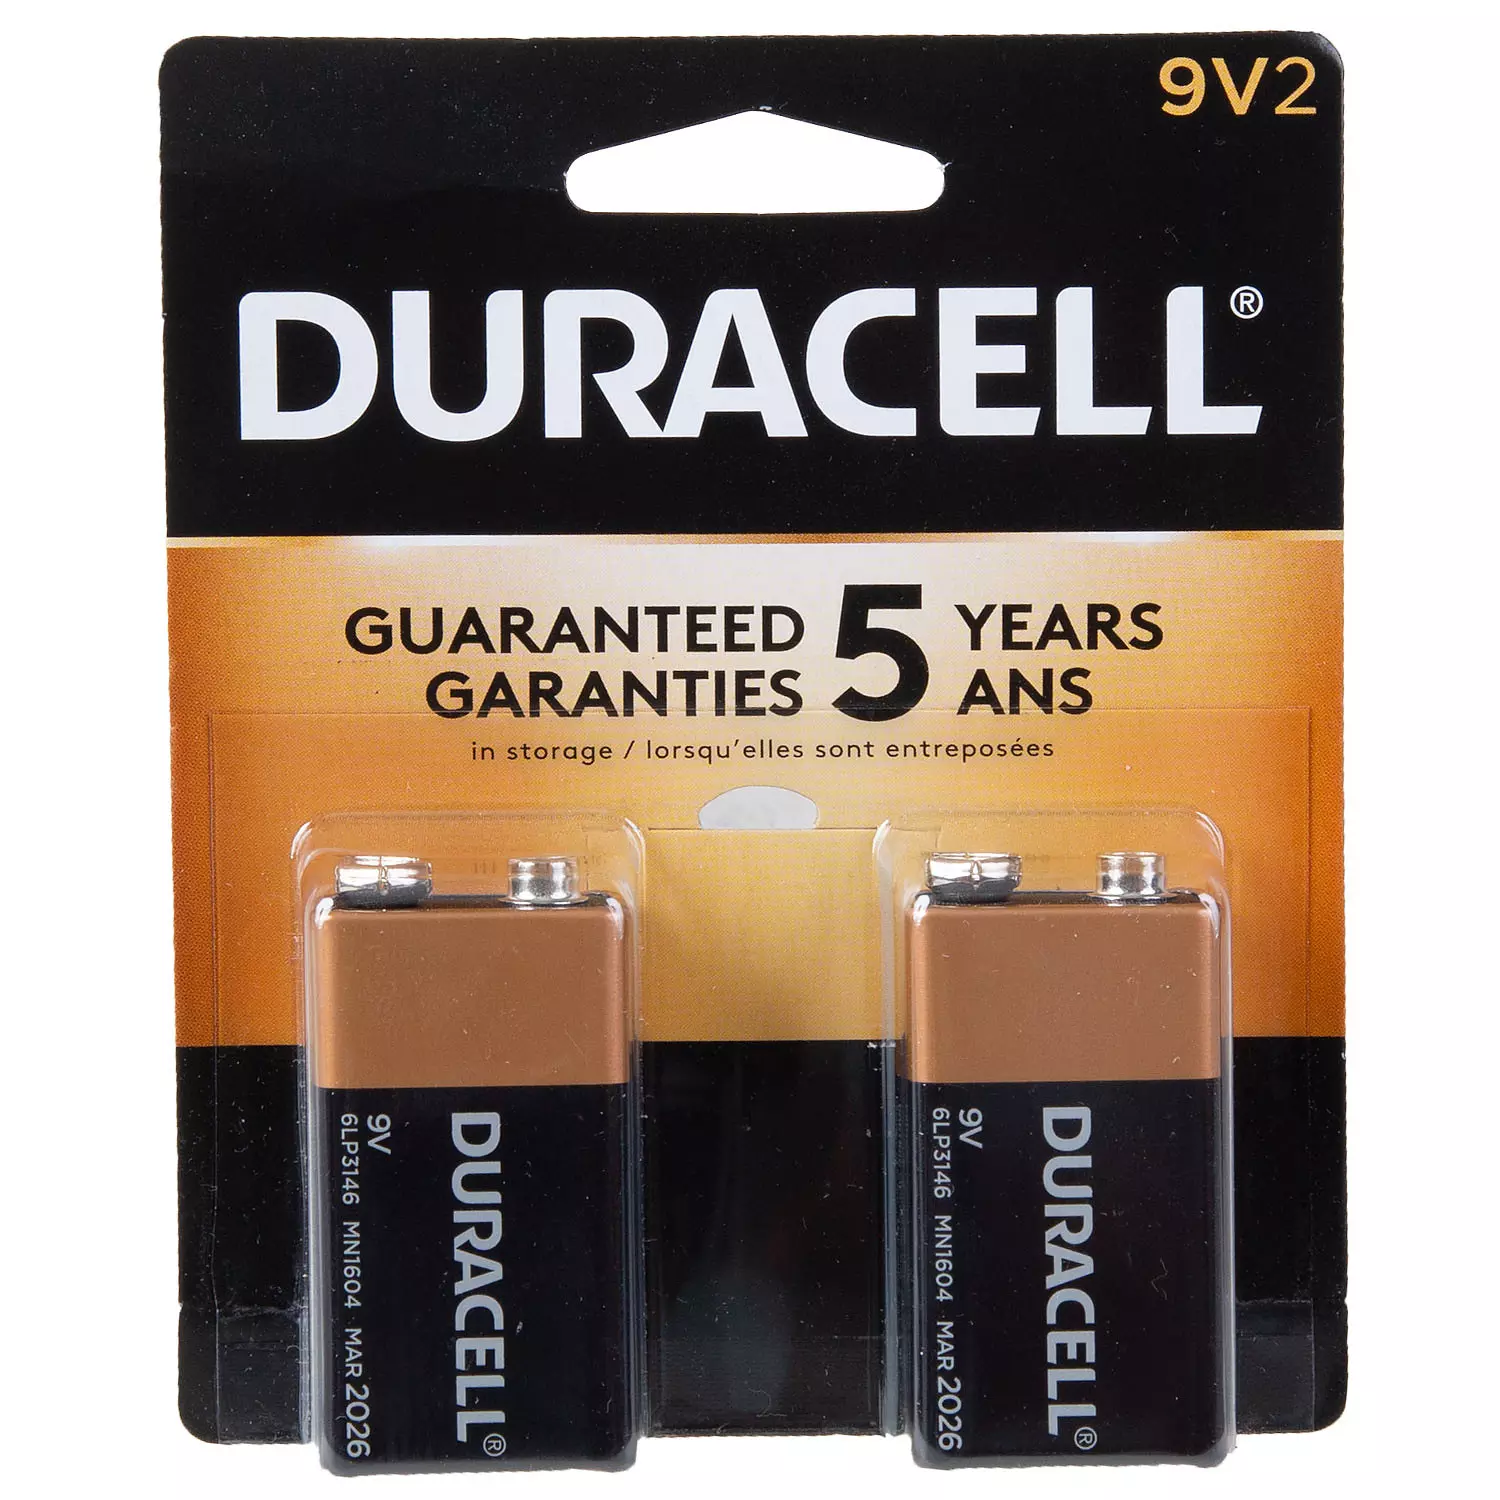 Duracell - 9V piles alkalines, paq. de 2